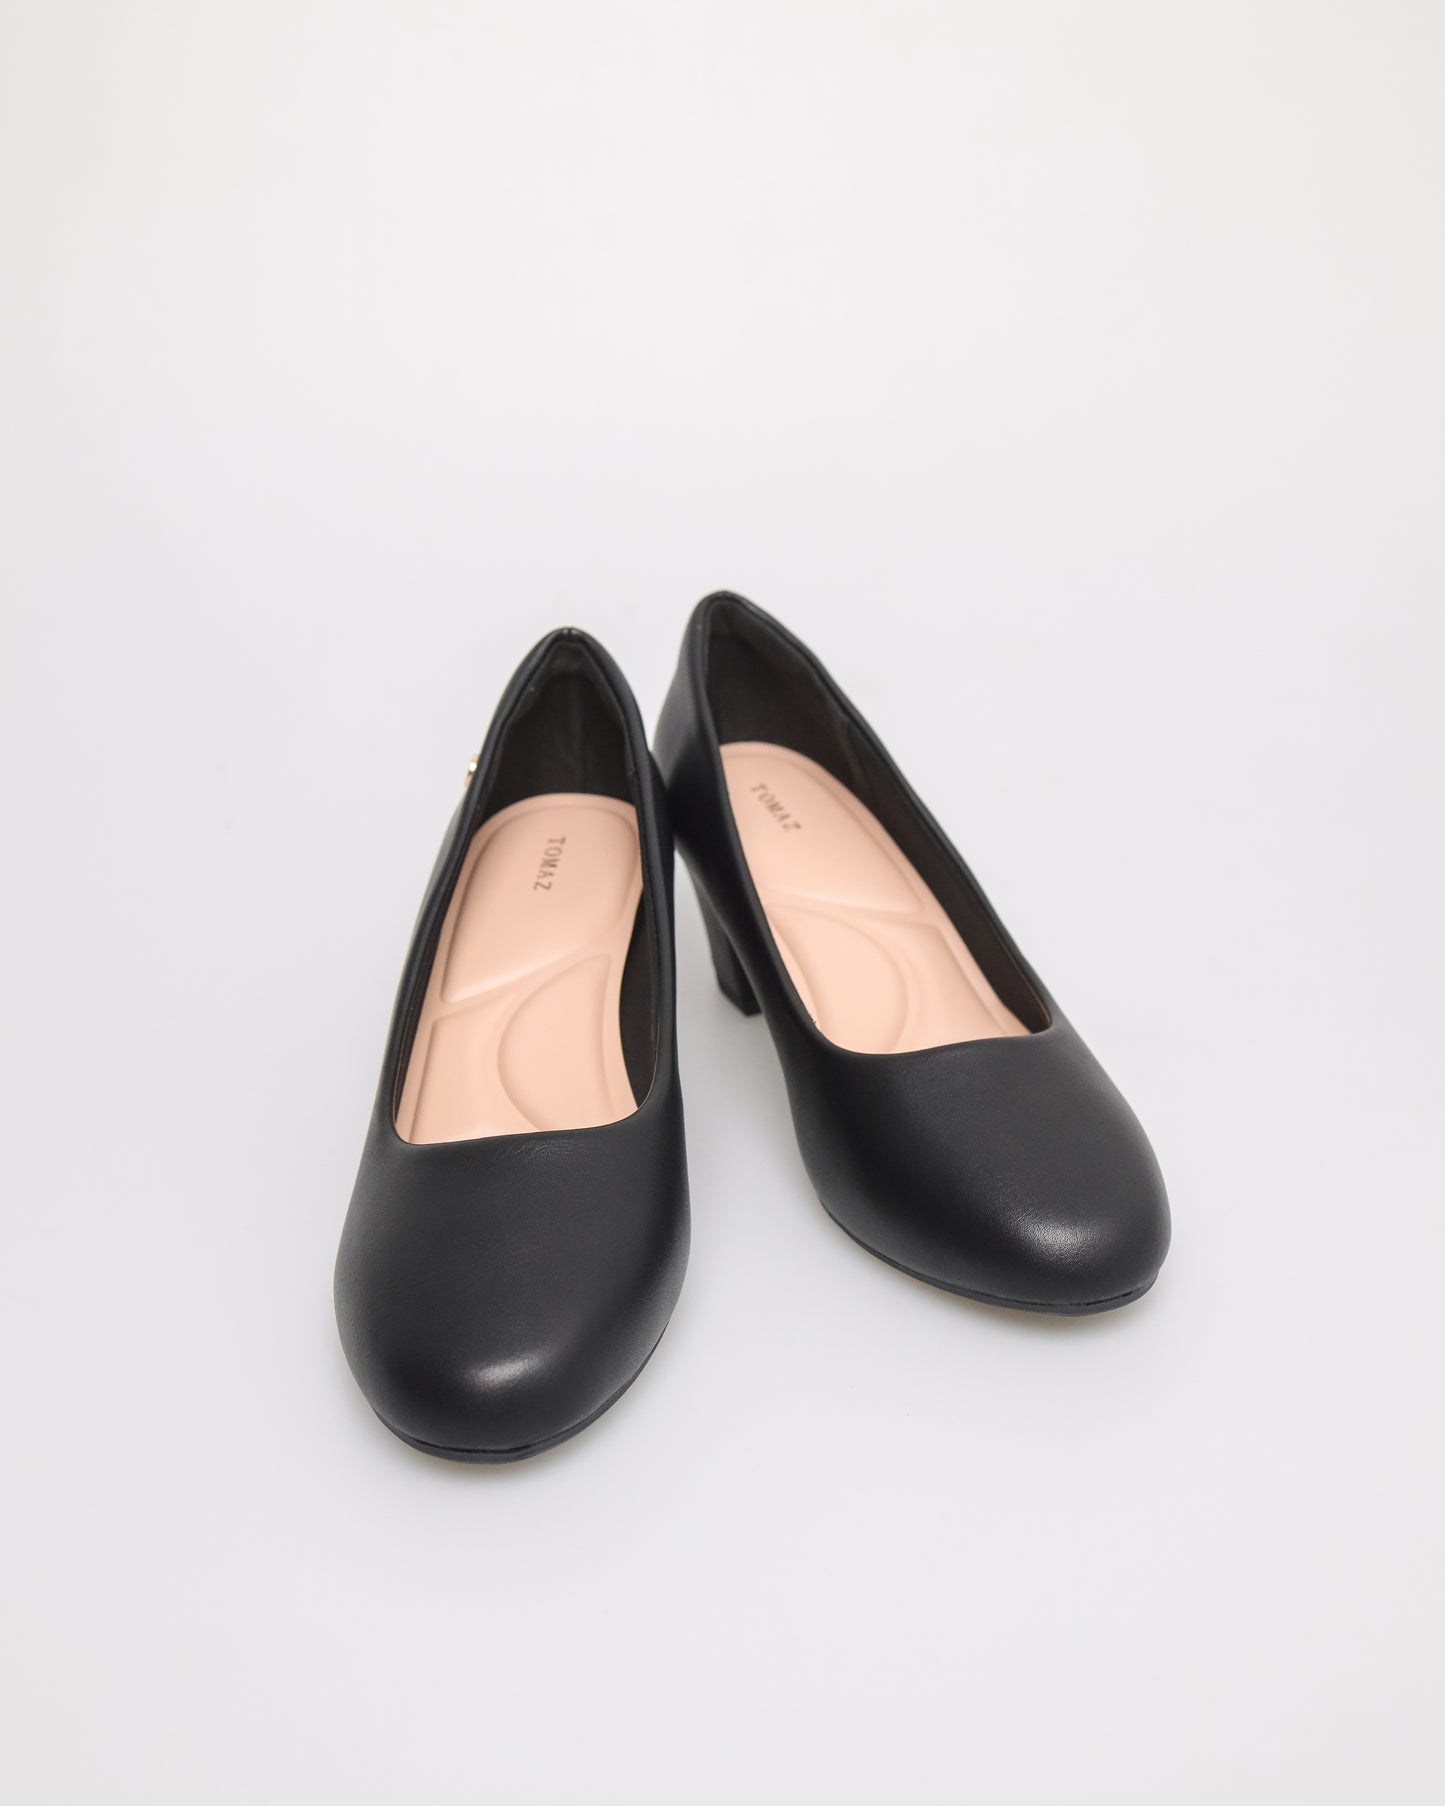 Tomaz NN339 Ladies Pointy Heels (Black)